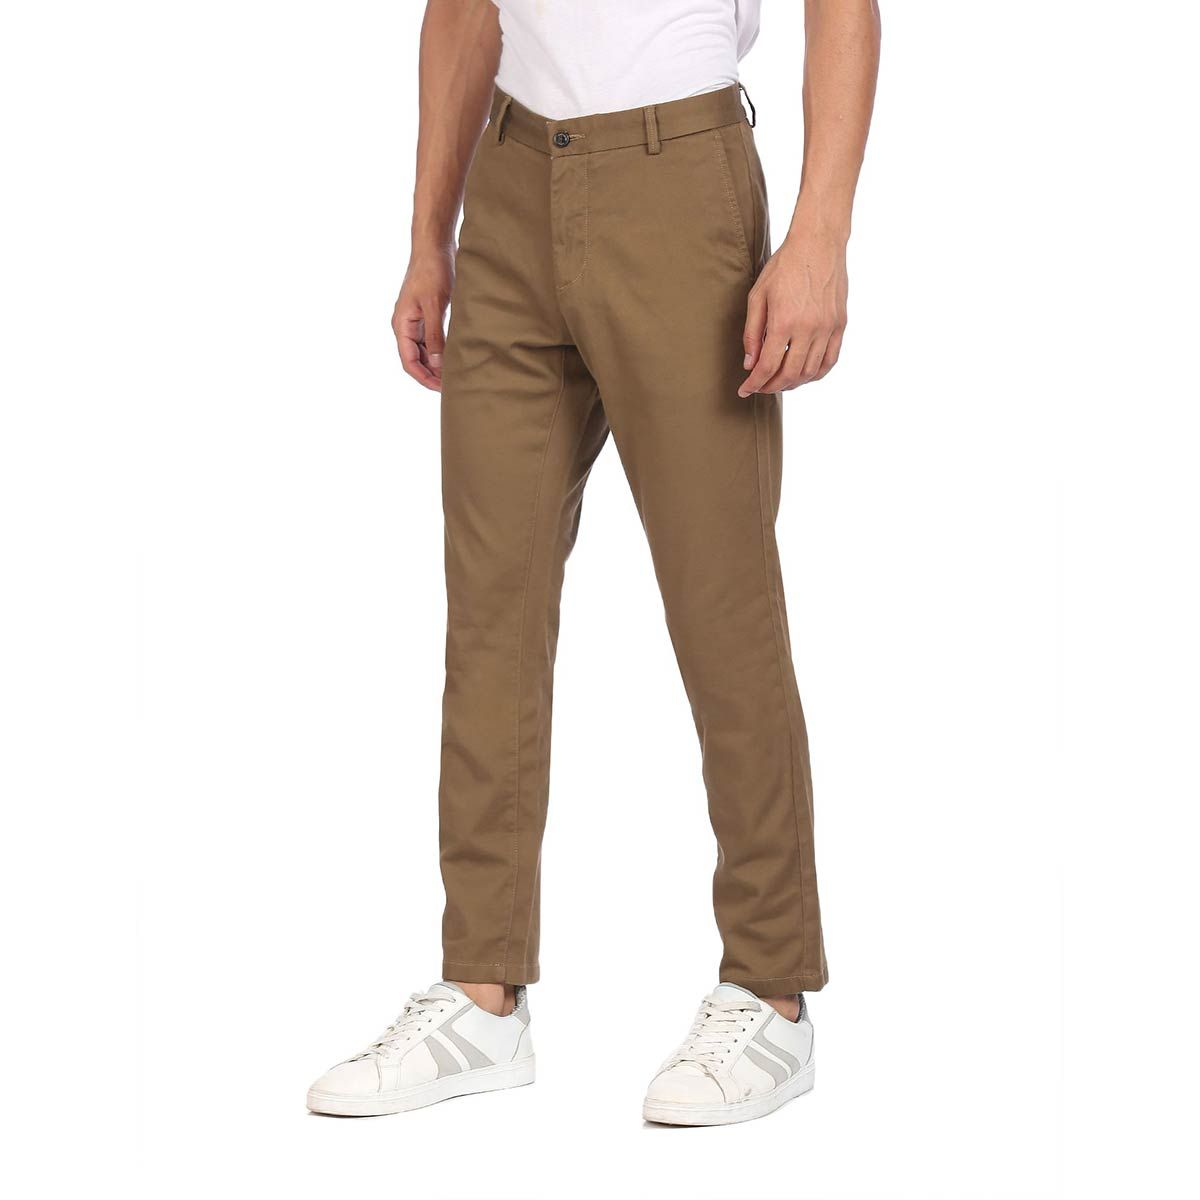 ARROW Slim Fit Men Grey Trousers - Buy ARROW Slim Fit Men Grey Trousers  Online at Best Prices in India | Flipkart.com